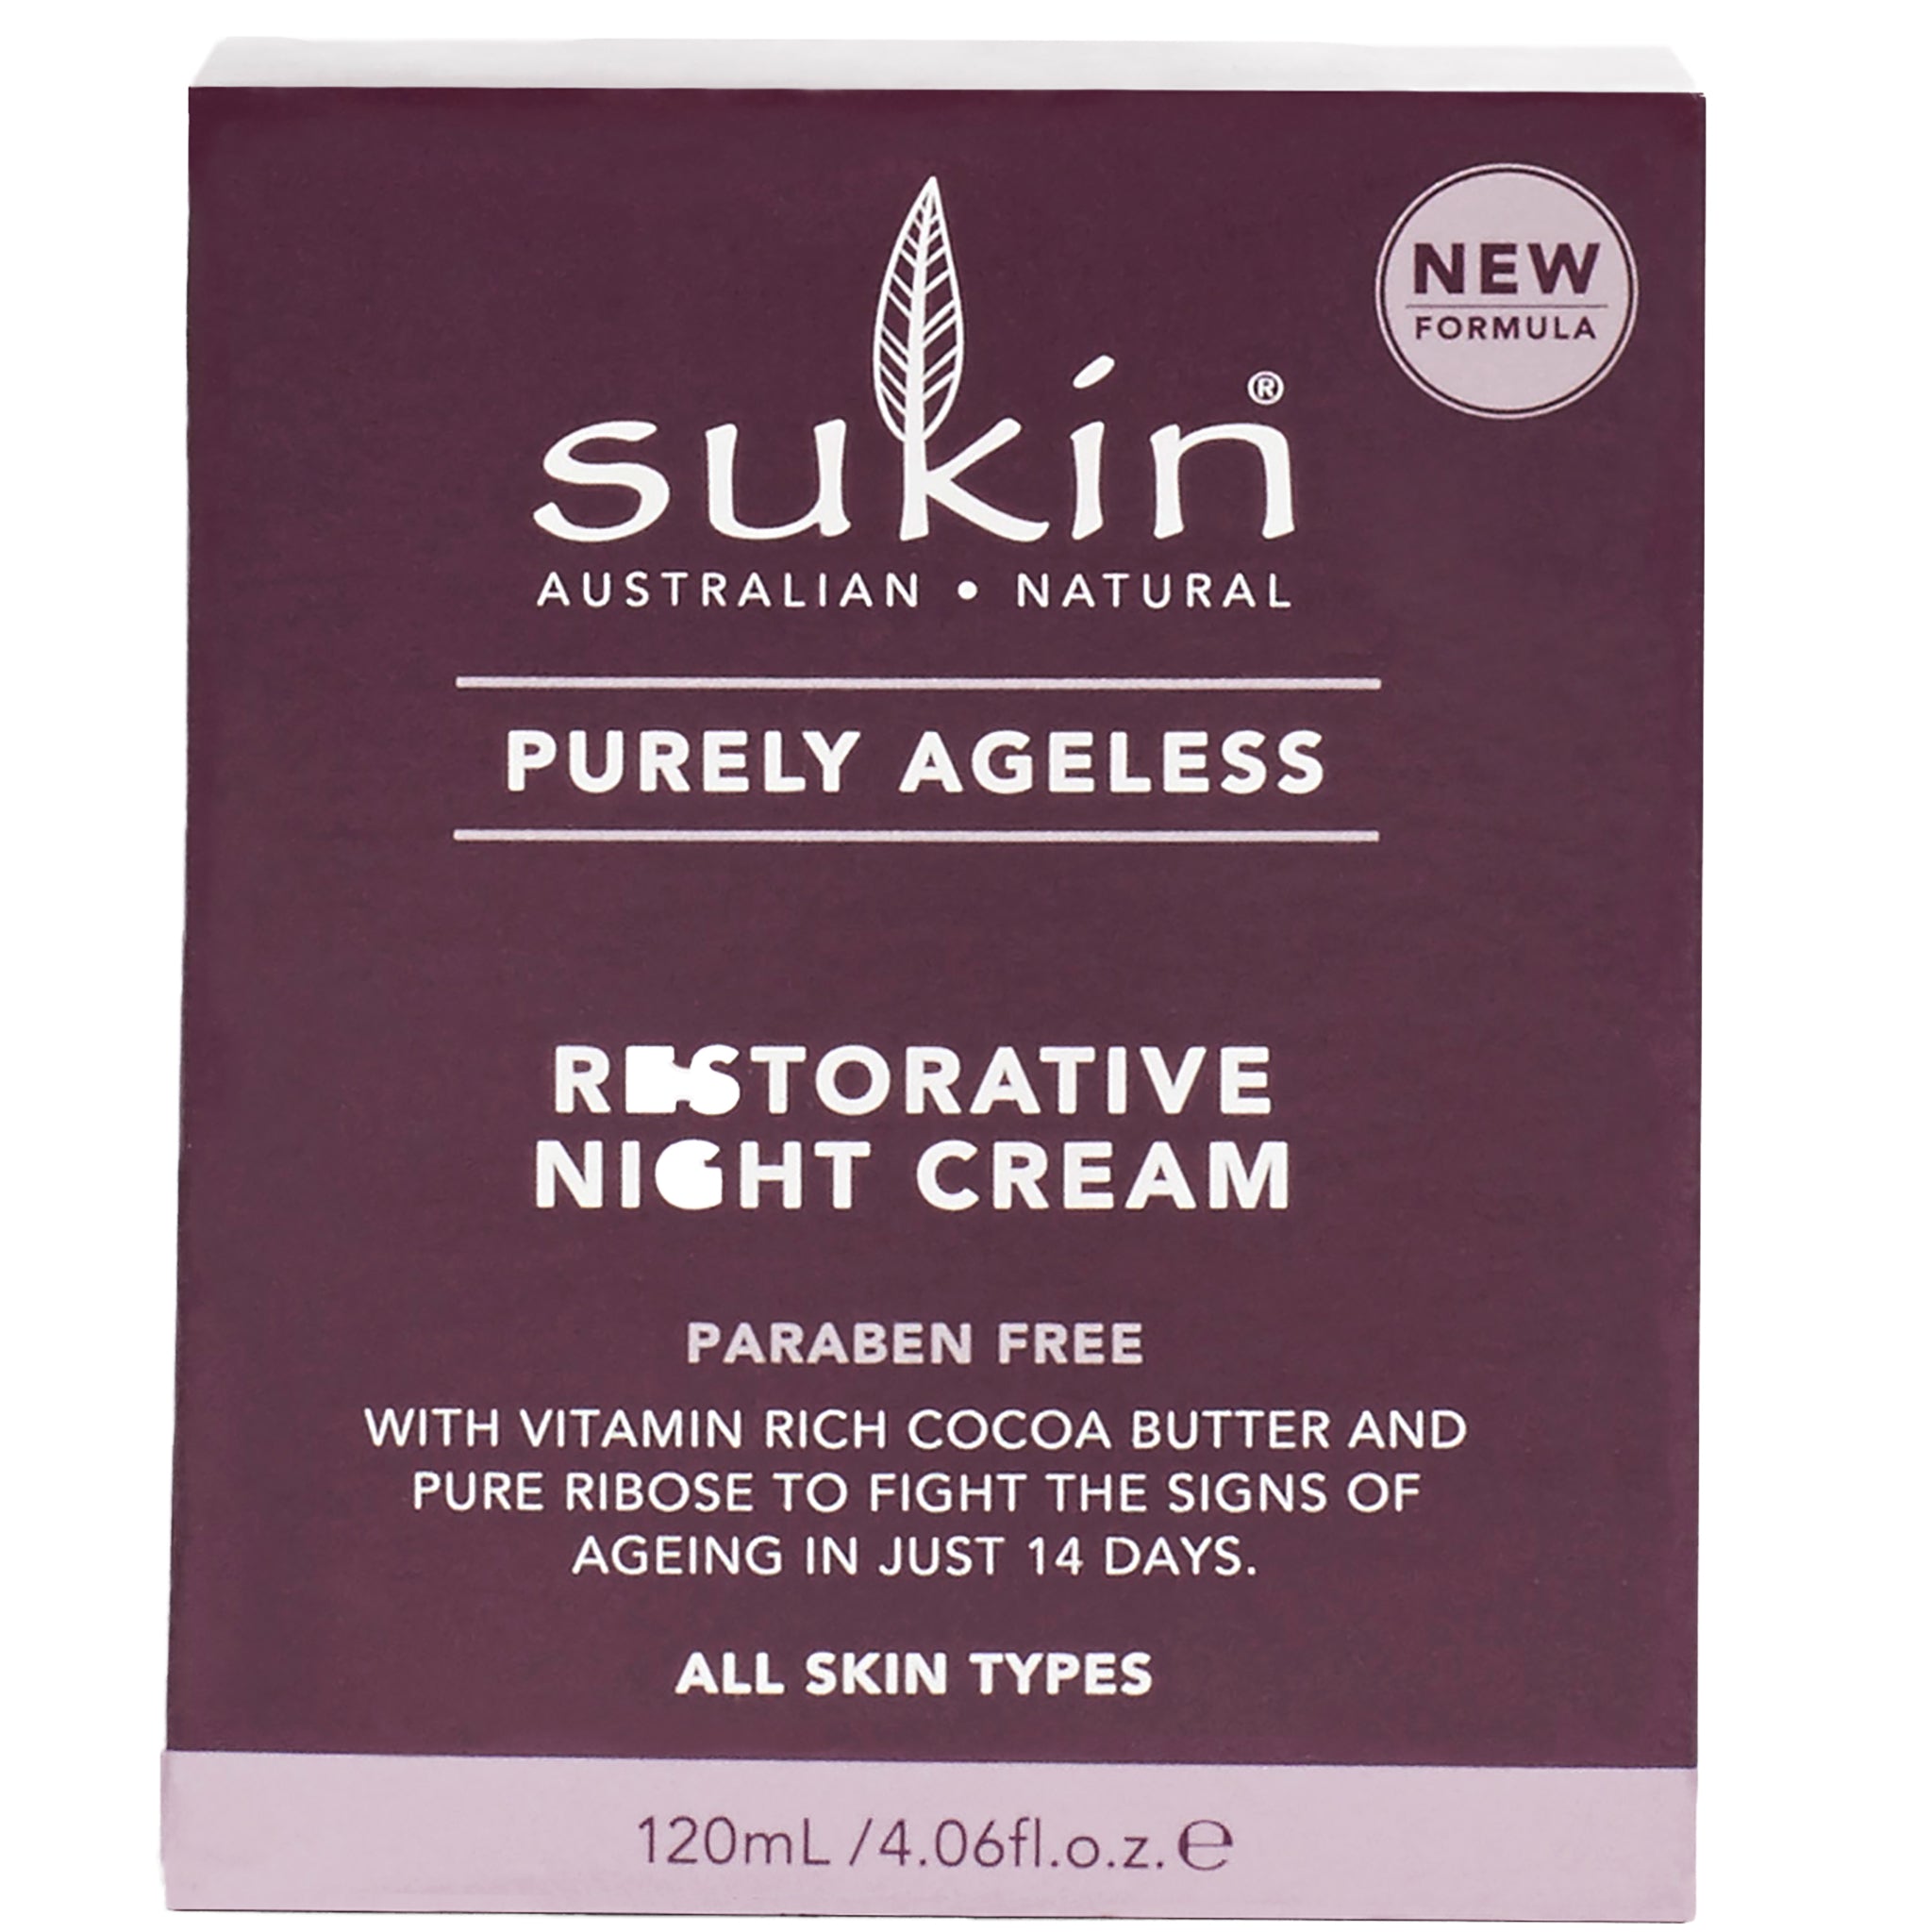 Purely Ageless Restorative Night Cream - mypure.co.uk